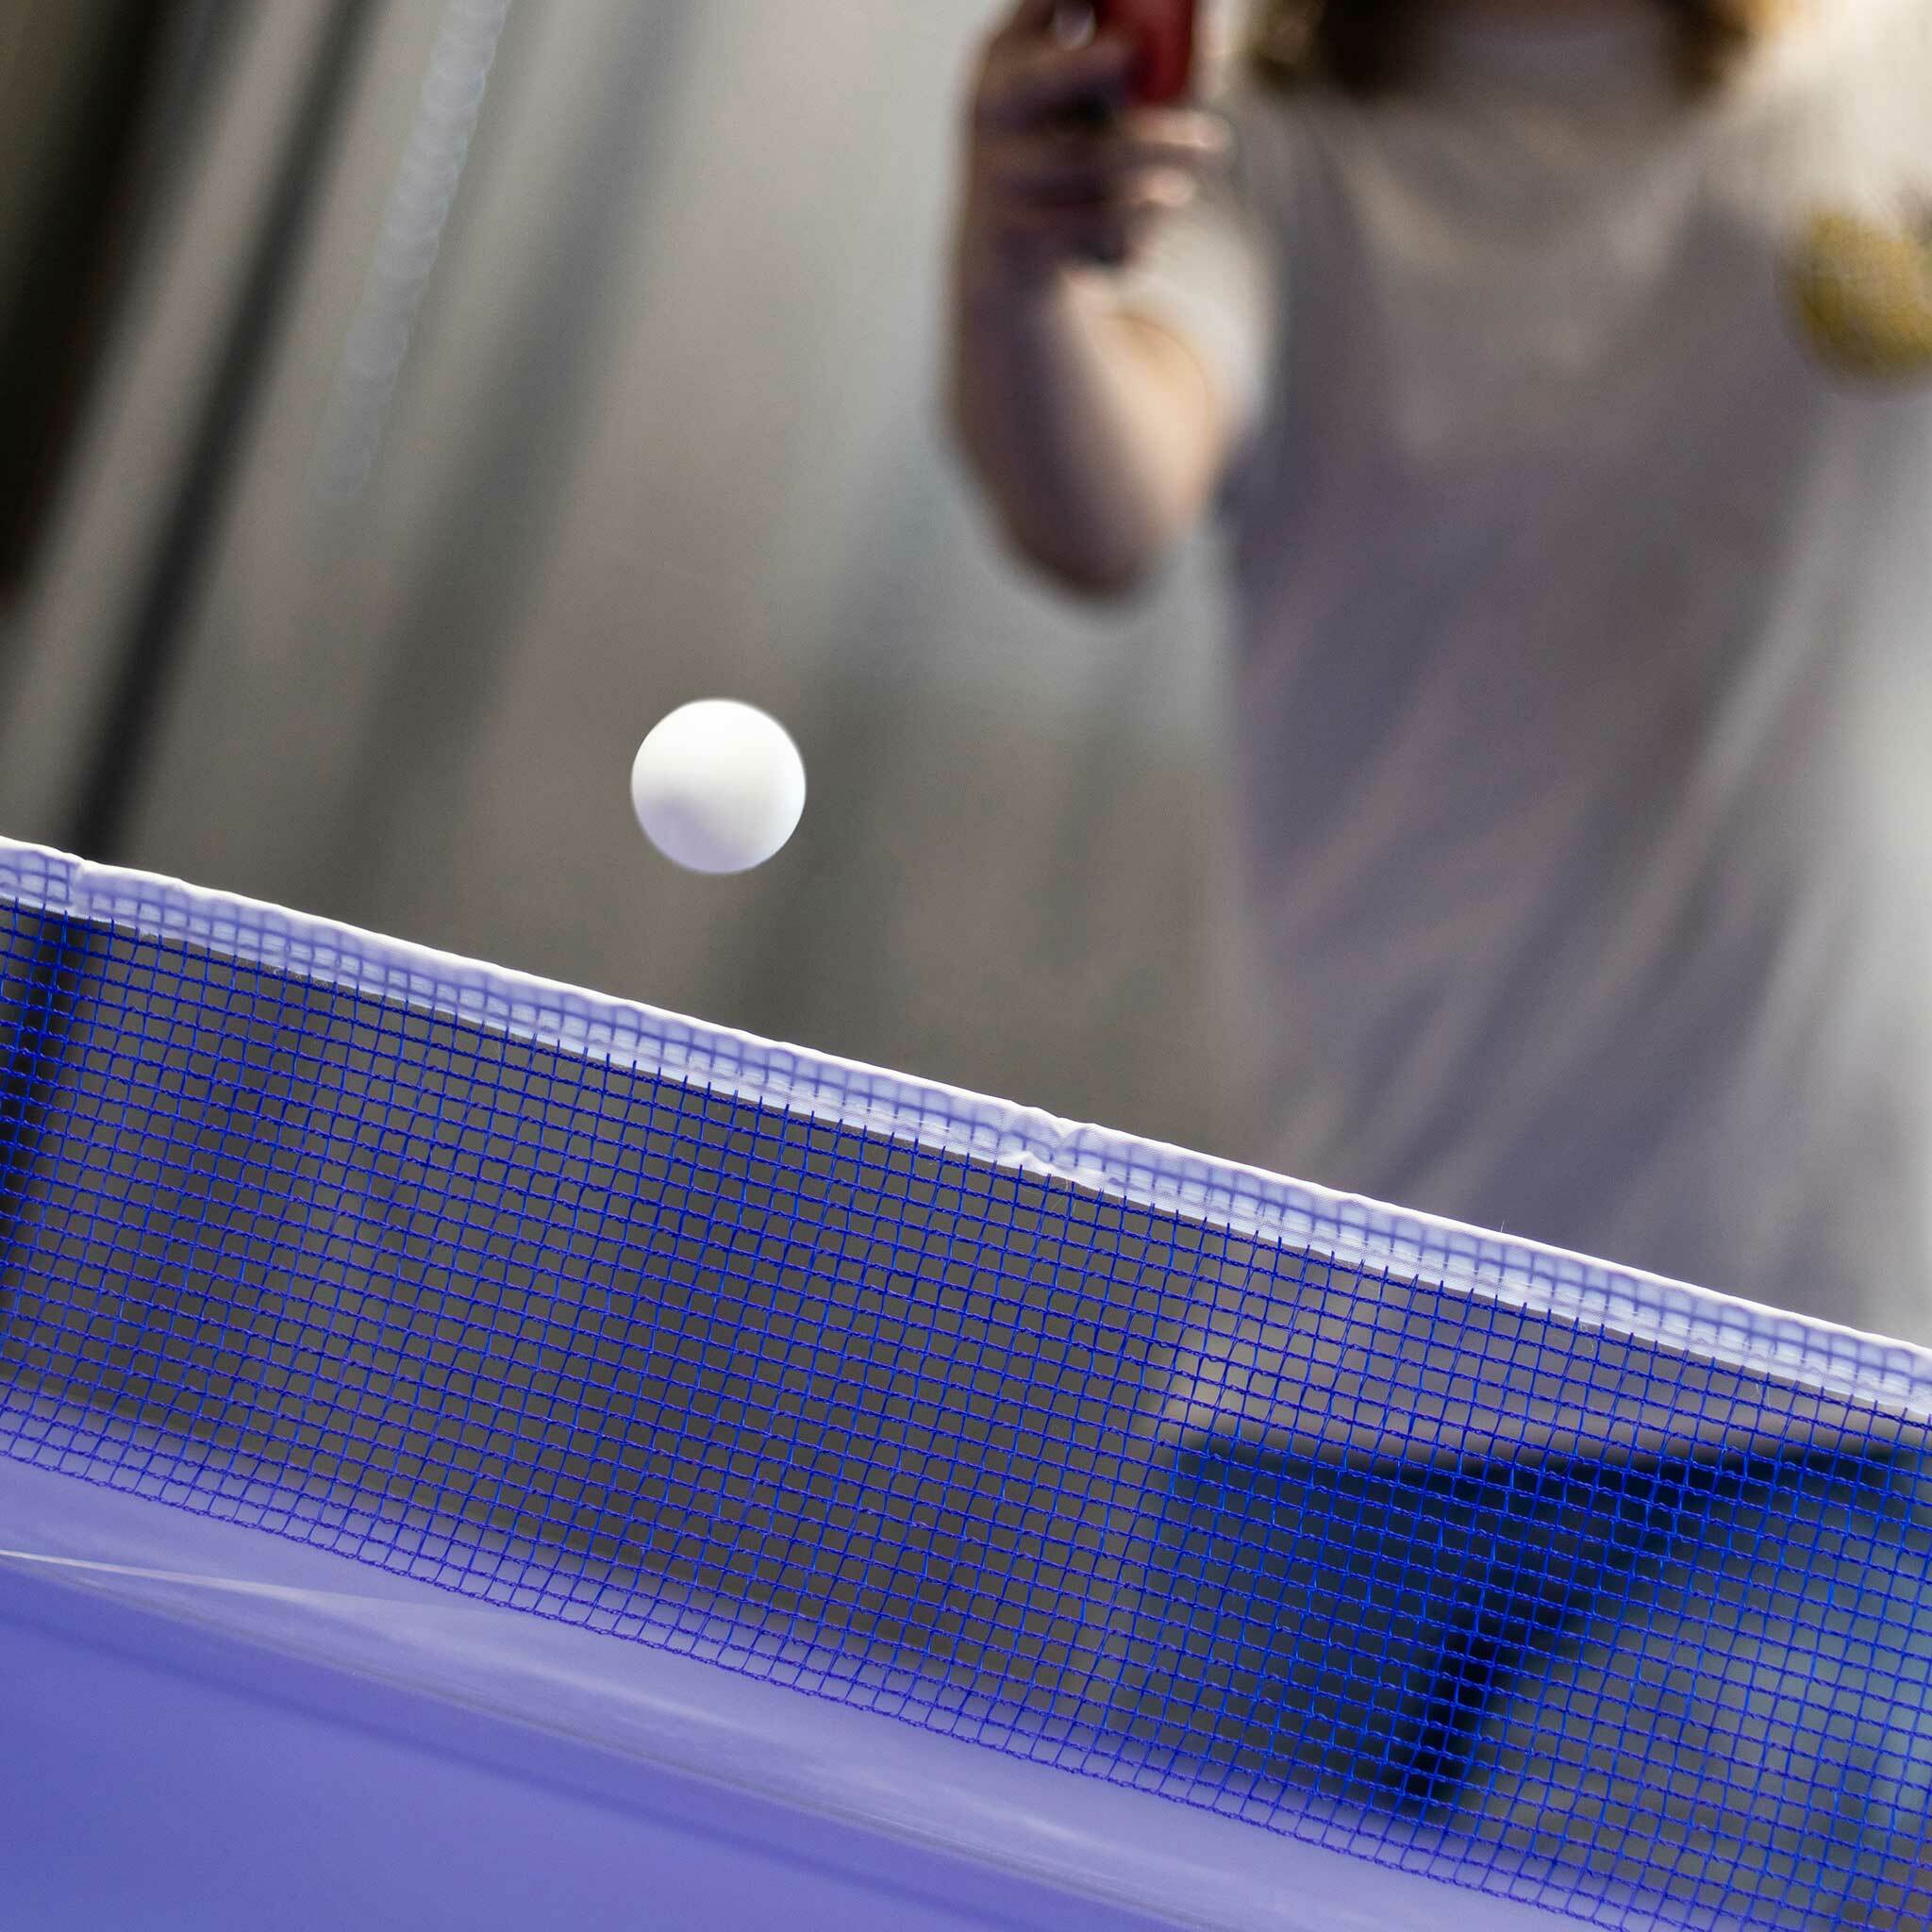 Raquetas Ping Pong Gimbel - Tienda Deportiva %